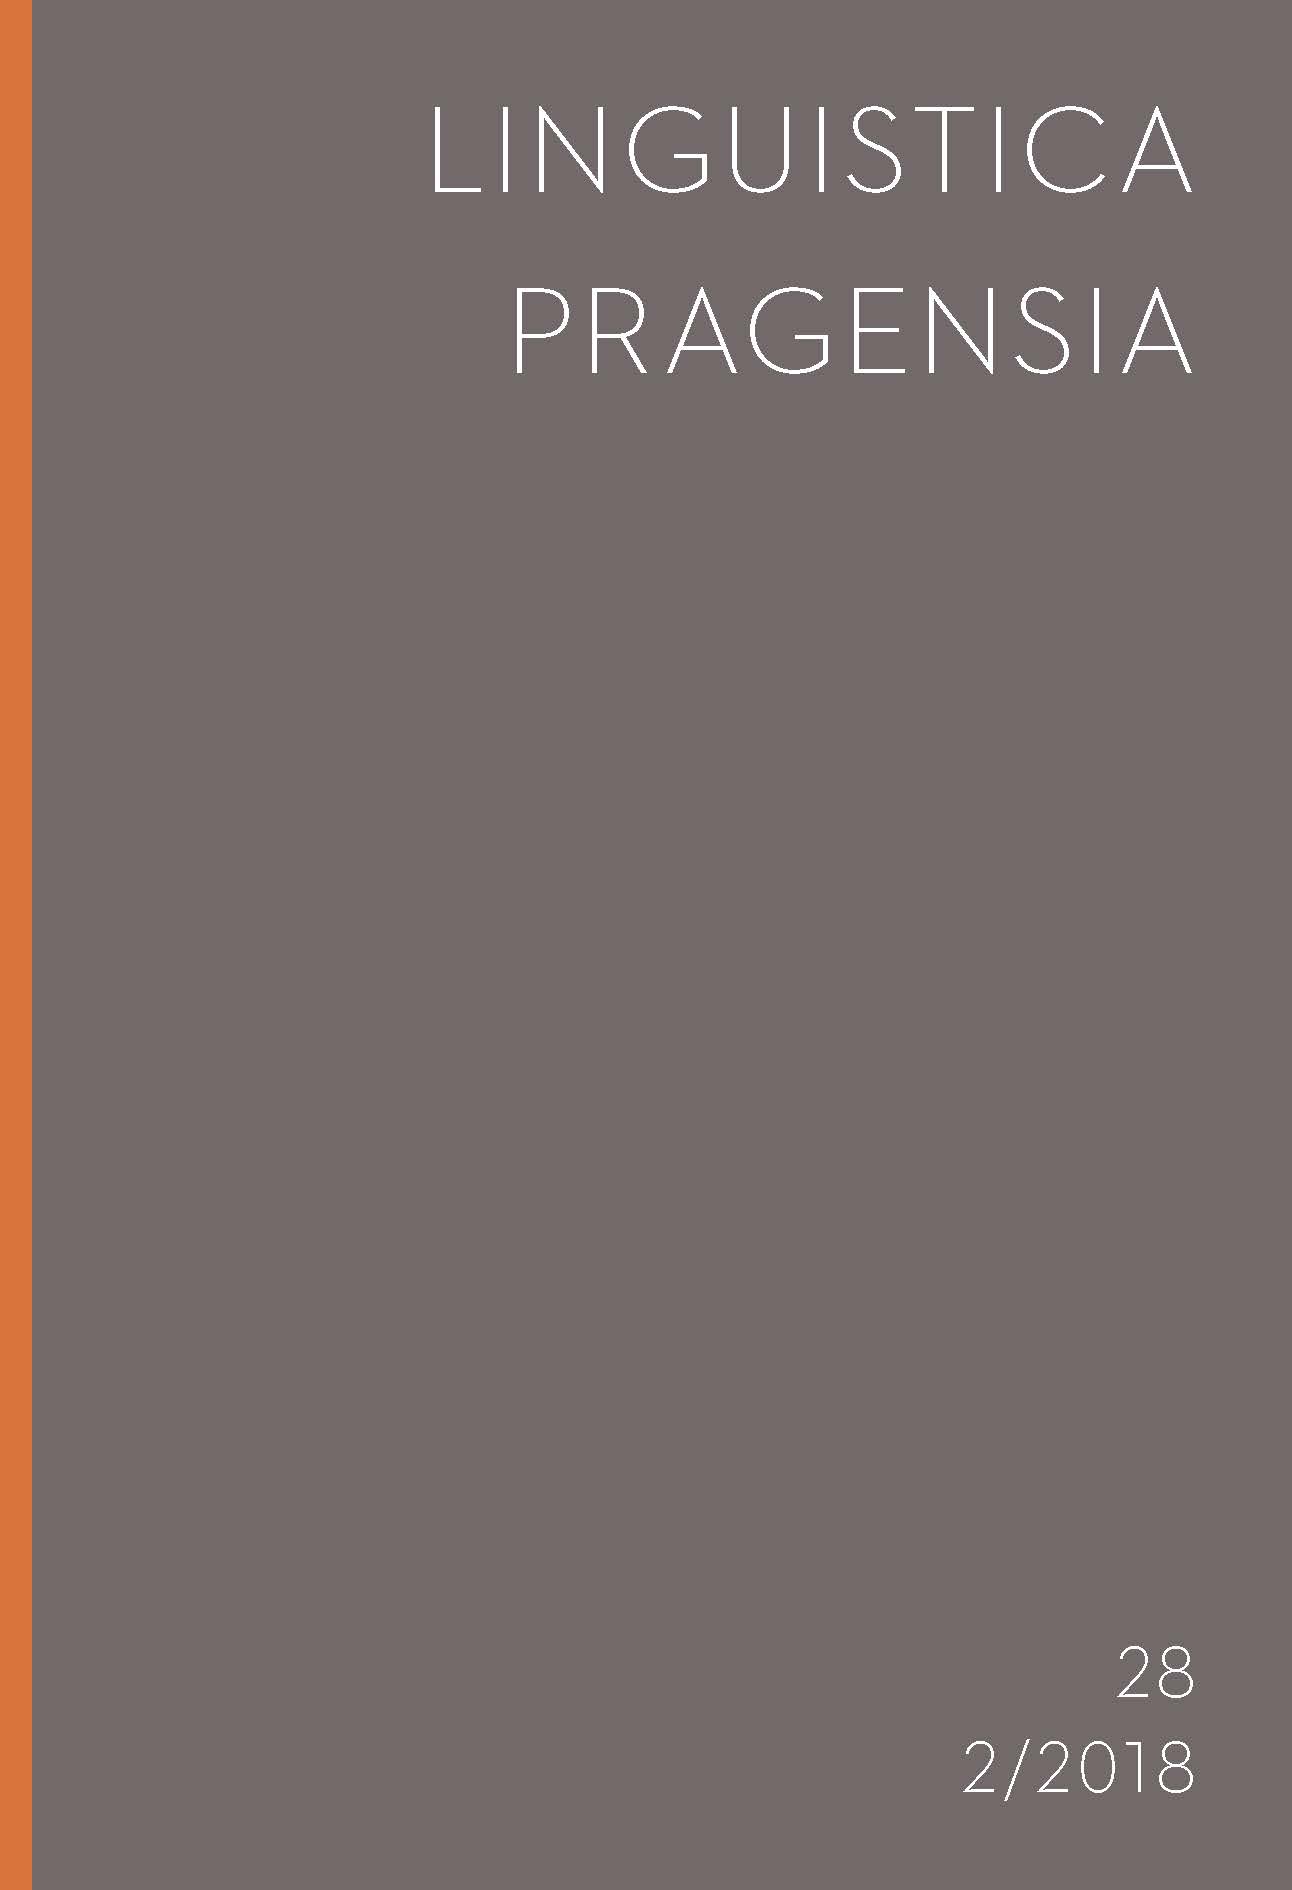 Linguistica Pragensia Cover Image